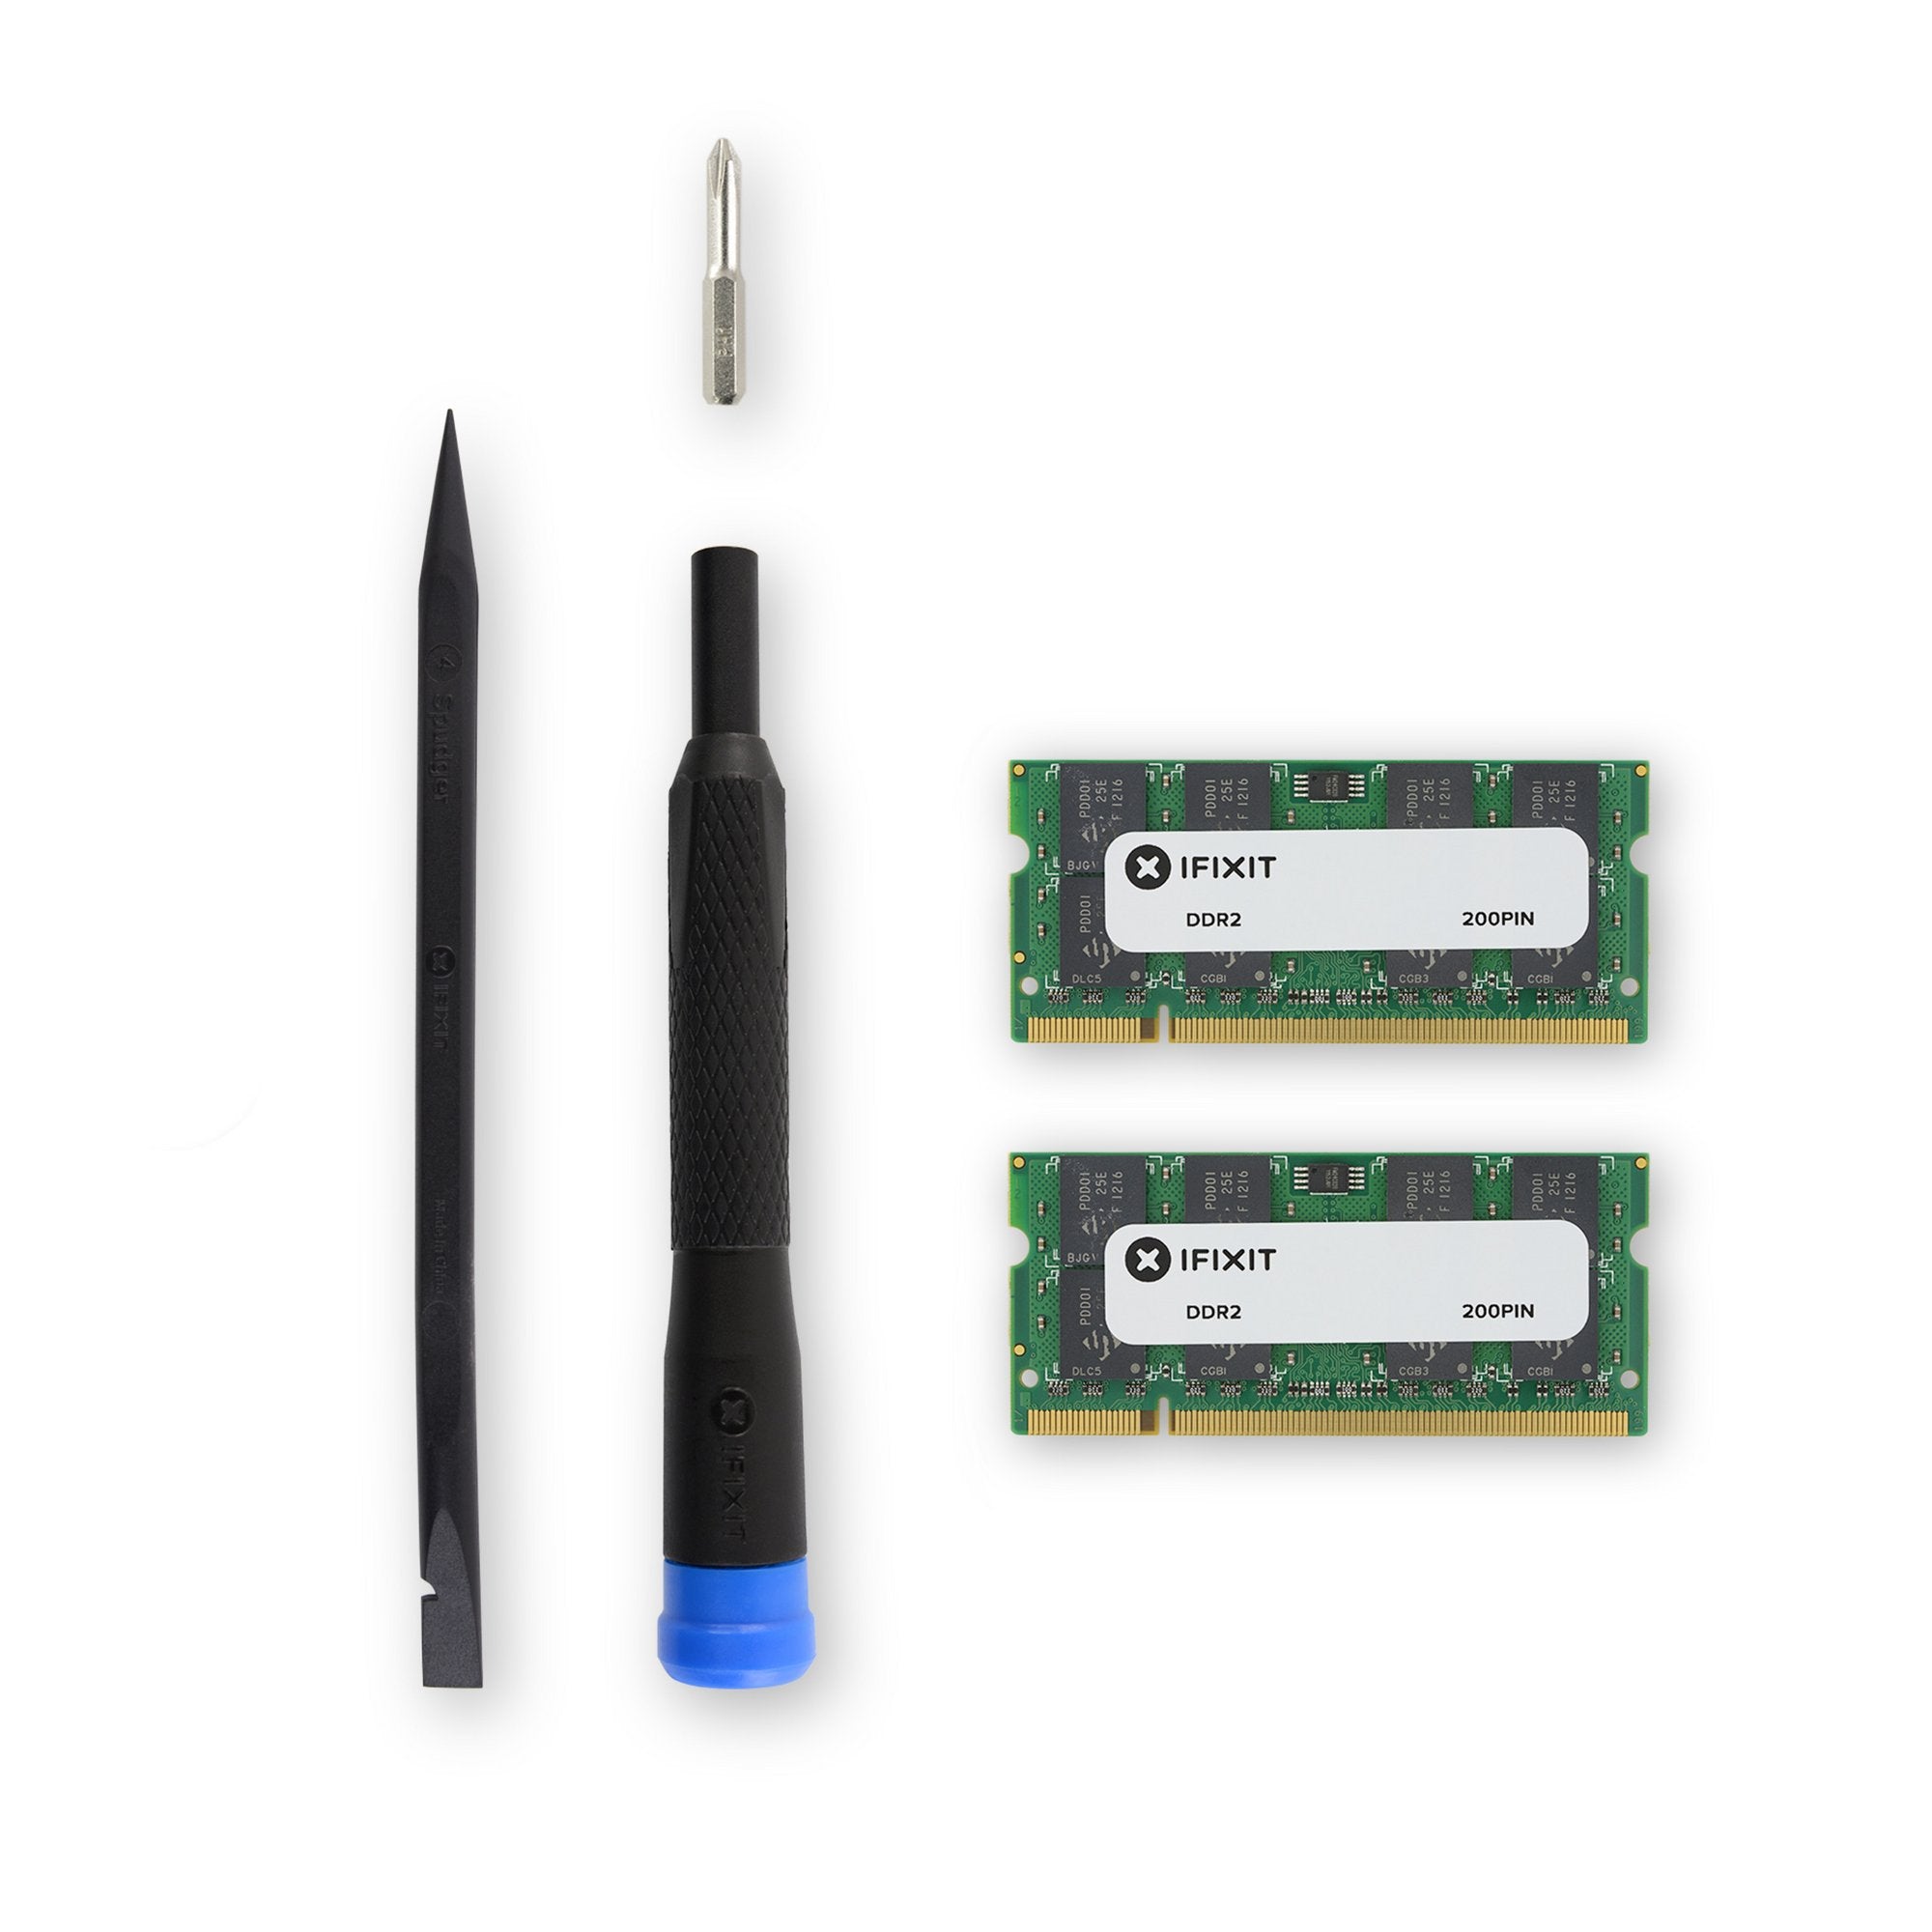 iMac Intel 20" EMC 2133 (Late 2007) Memory Maxxer RAM Upgrade Kit